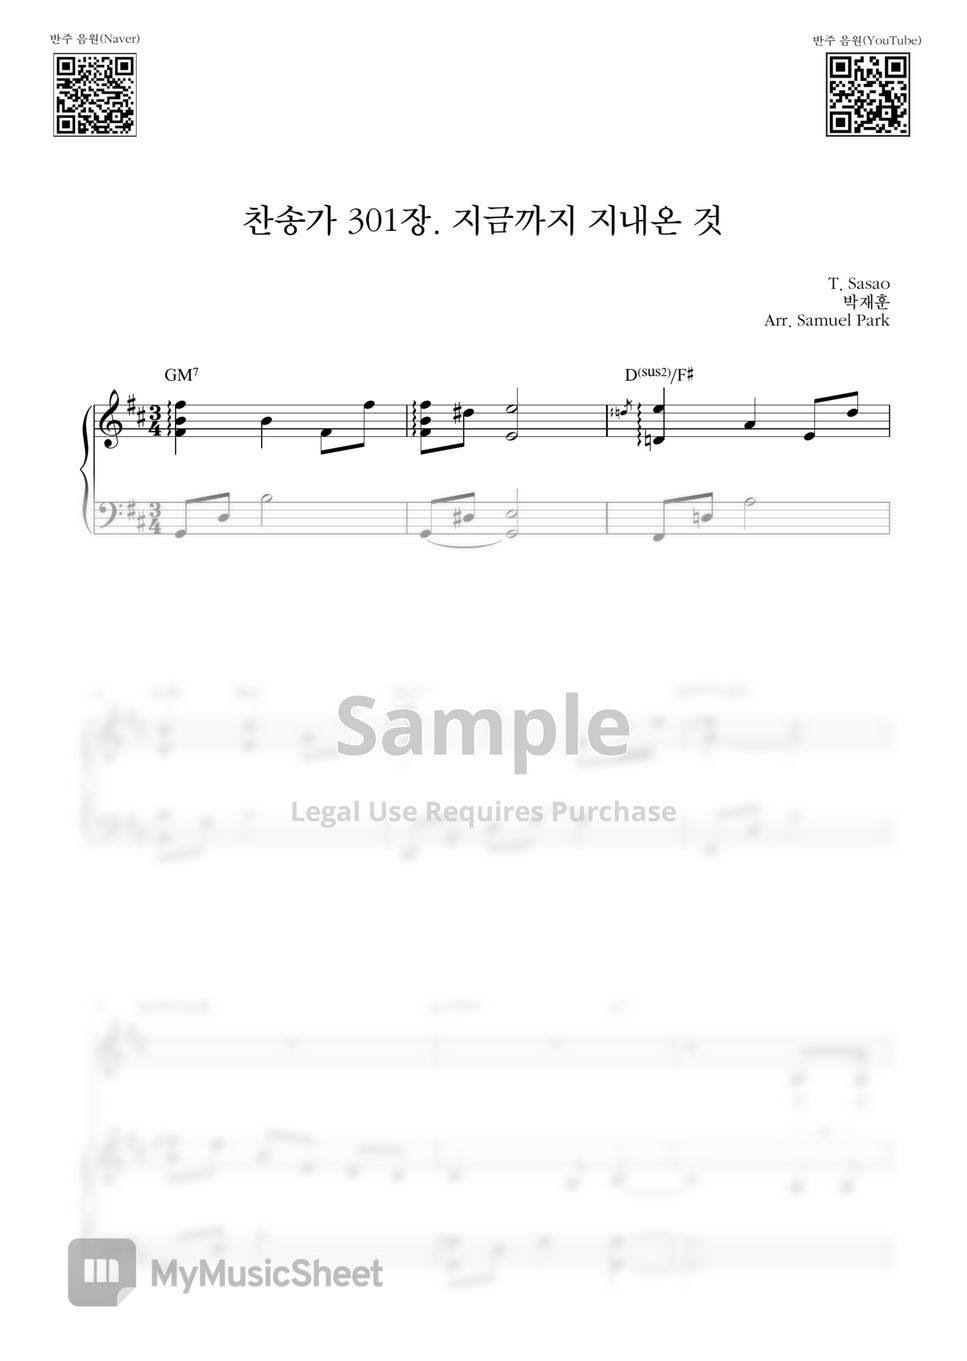 T.Sasao - 지금까지 지내온 것 (Piano Cover) by Samuel Park